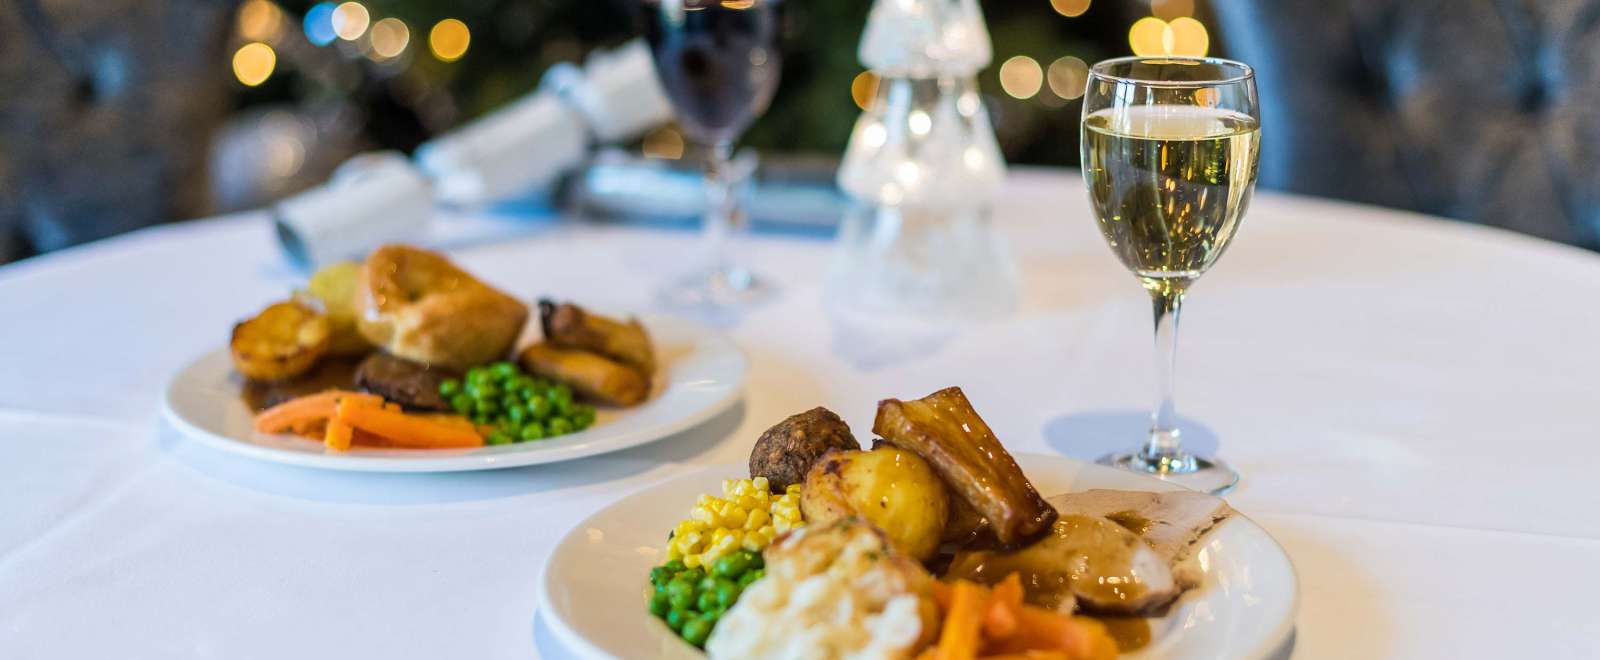 Devon Hotel Restaurant Dining Festive Christmas Carvery with Wine